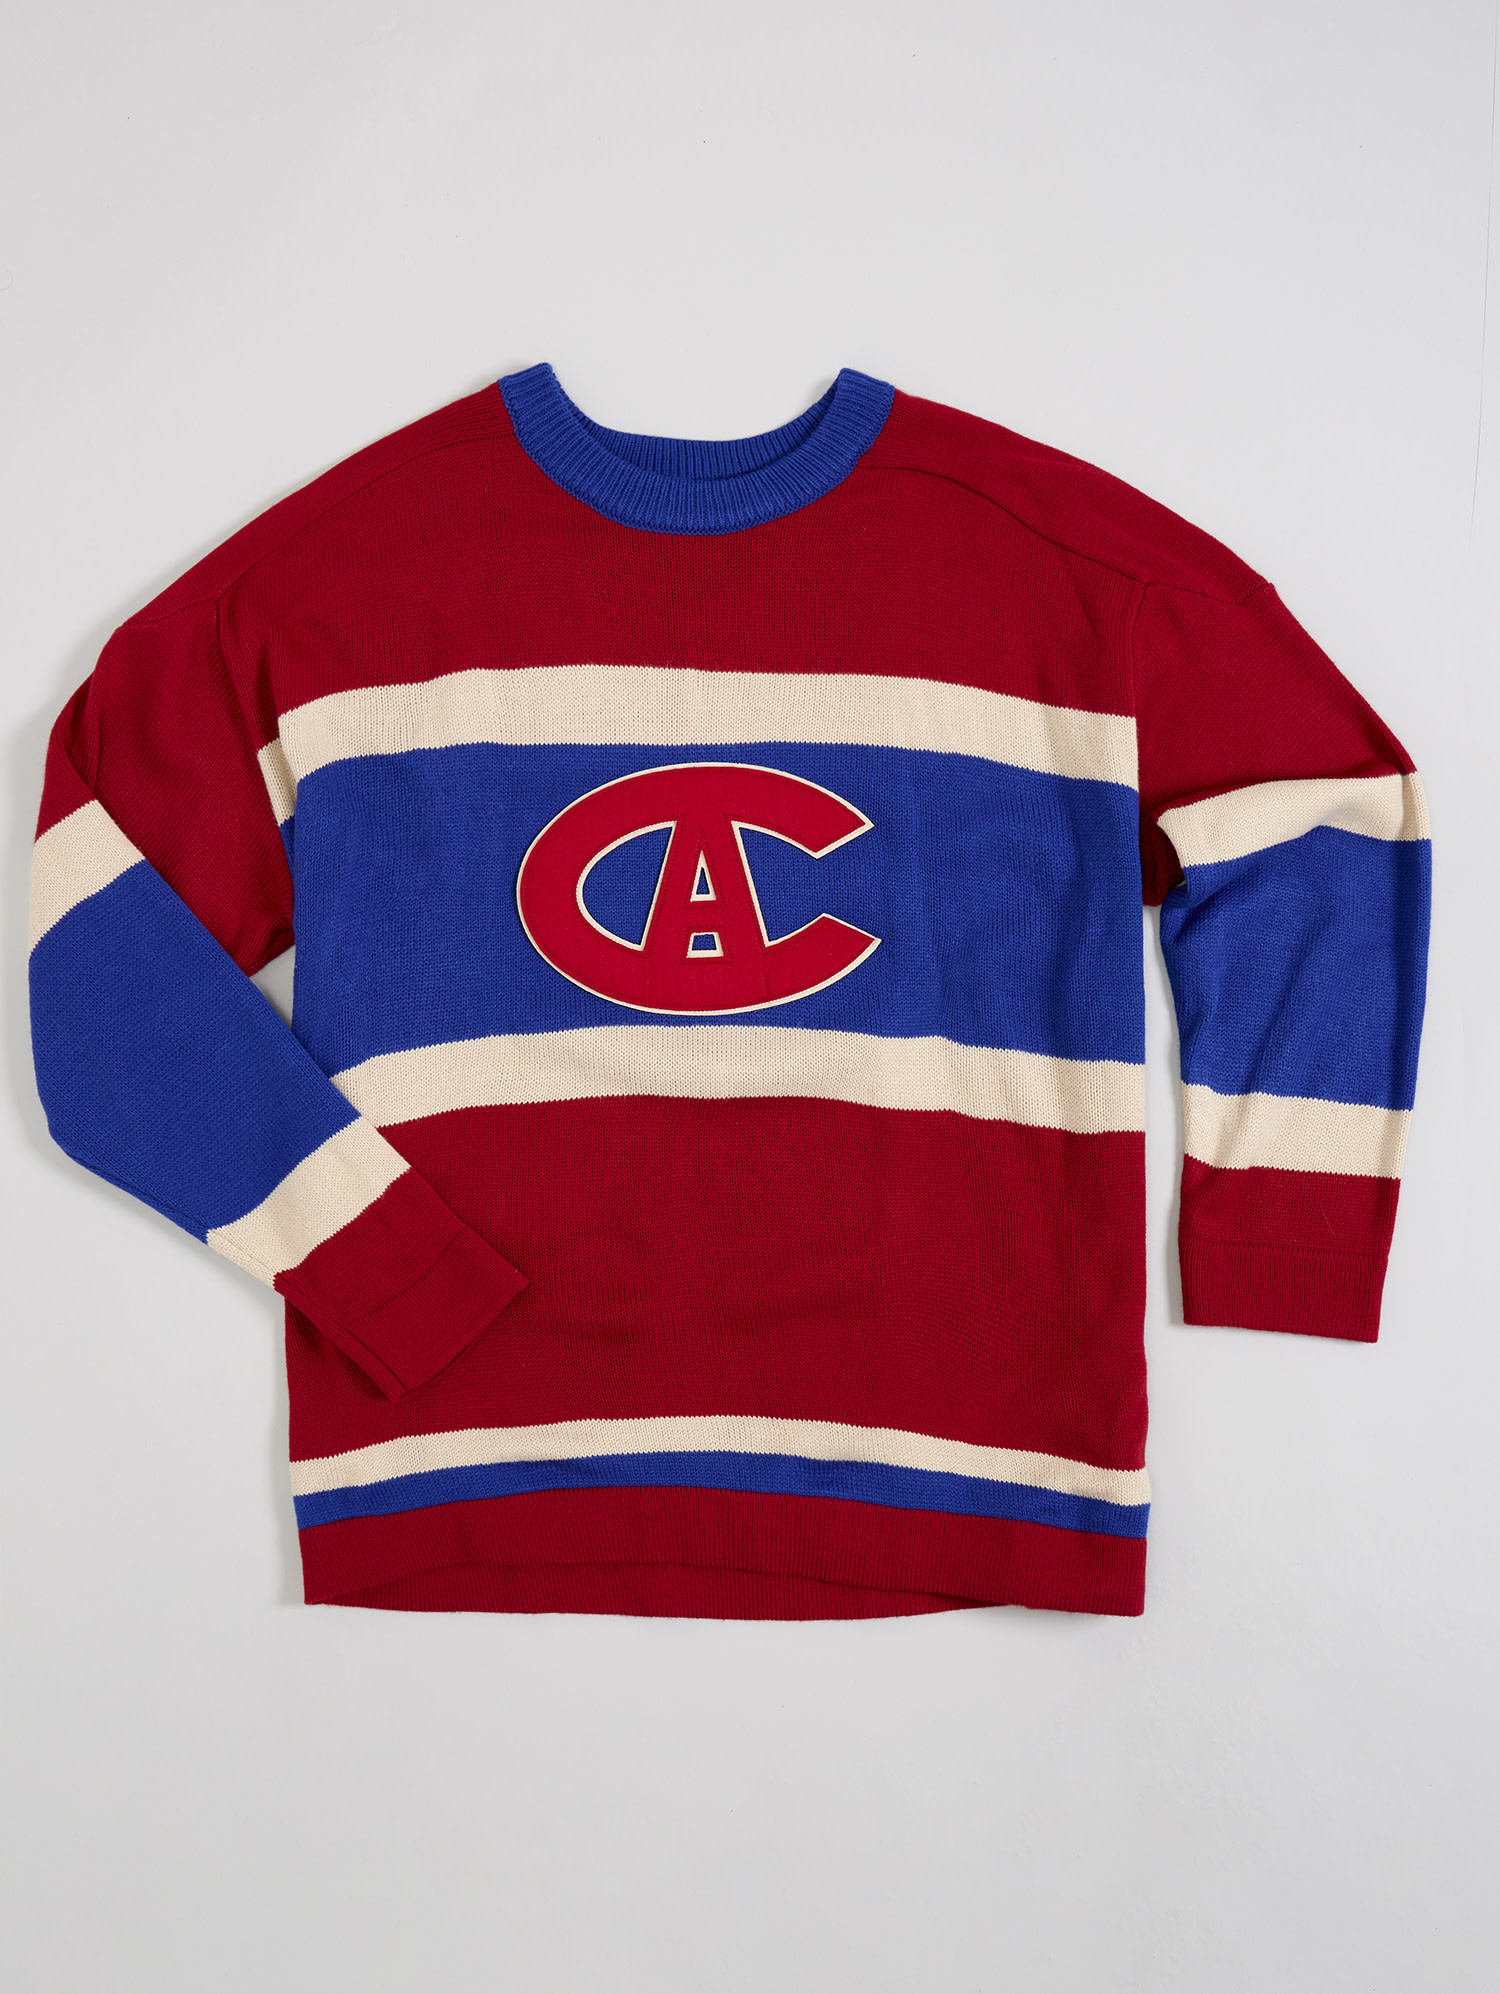 Montreal Canadiens Heritage Concepts team logo Hockey Jersey • Kybershop